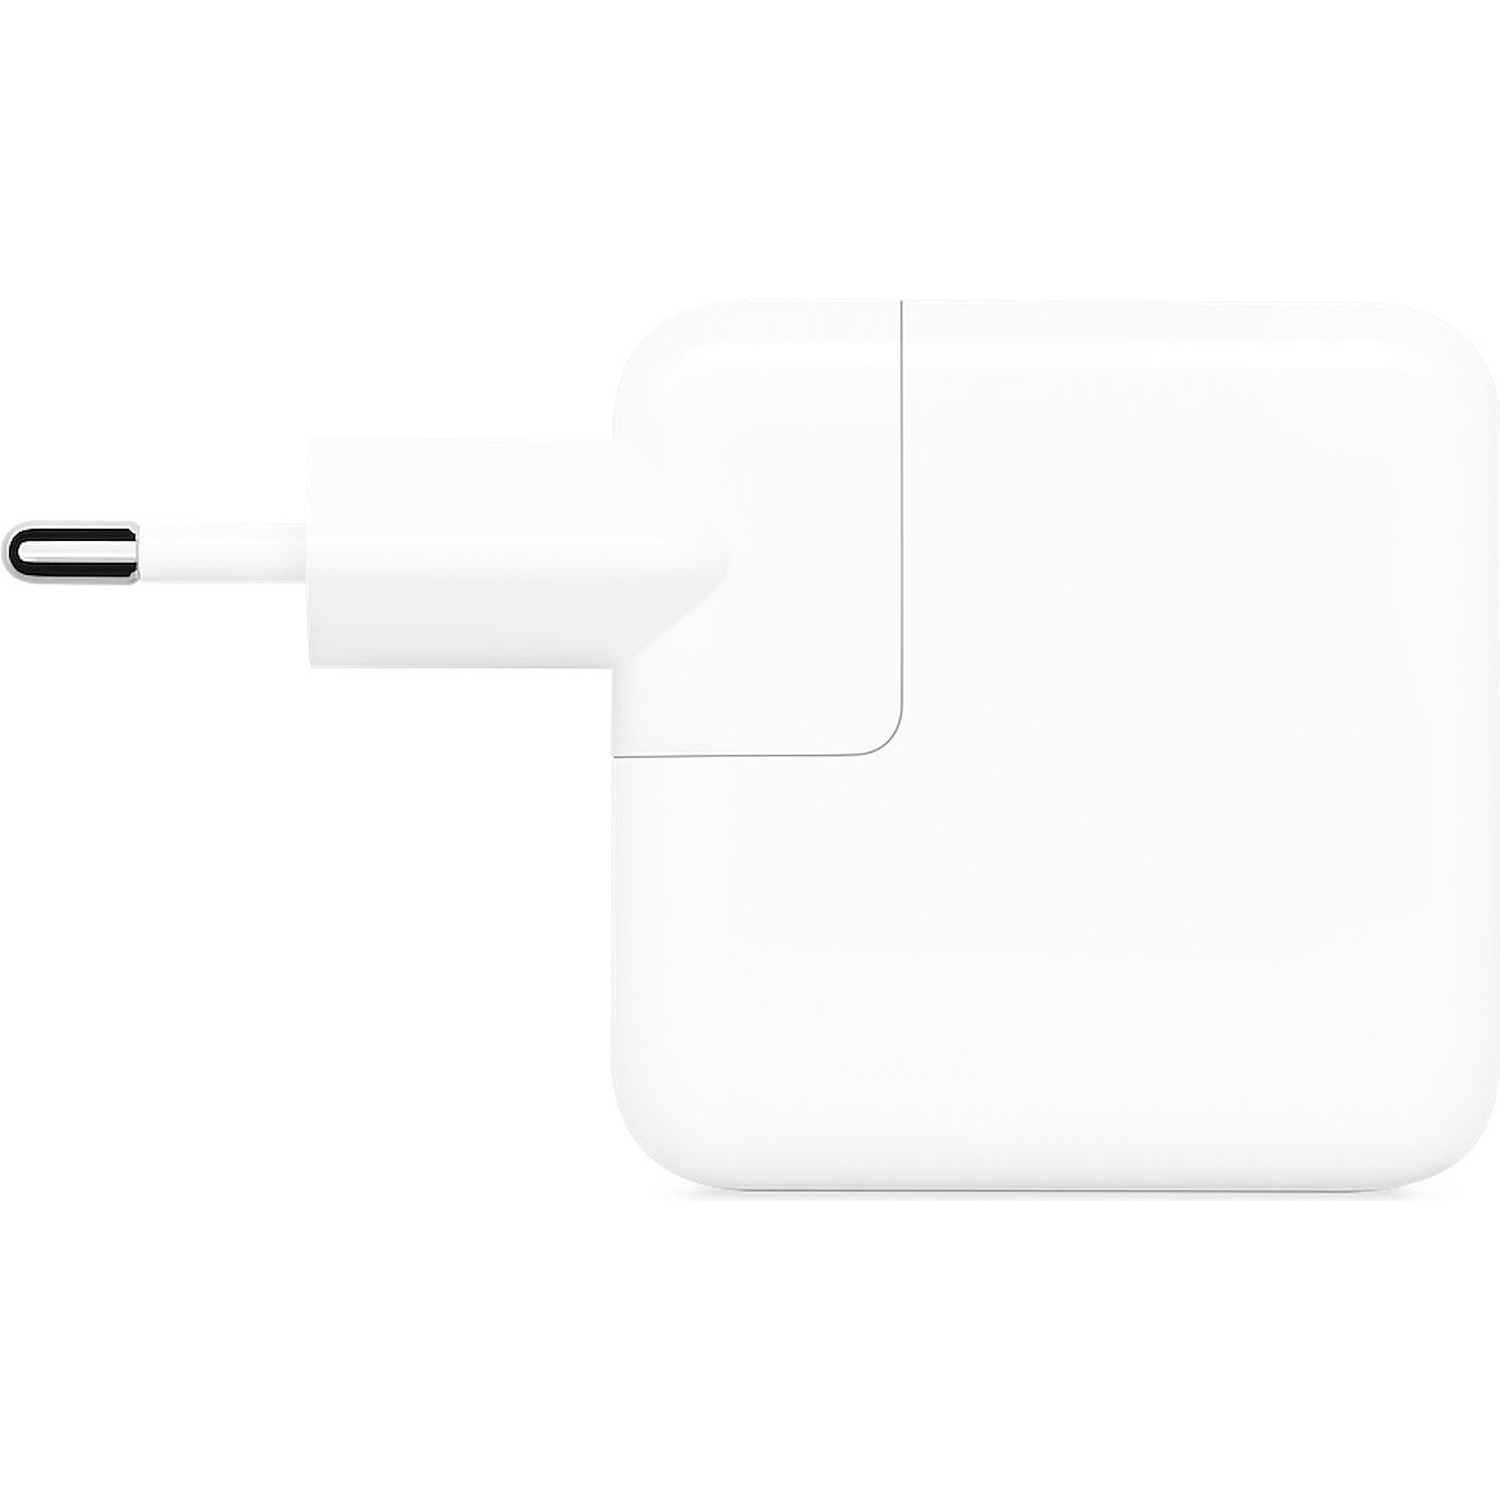 Immagine per Power adapter Apple USB-C 30W                     Alimentatore USB-C  MY1W2ZM/A da DIMOStore